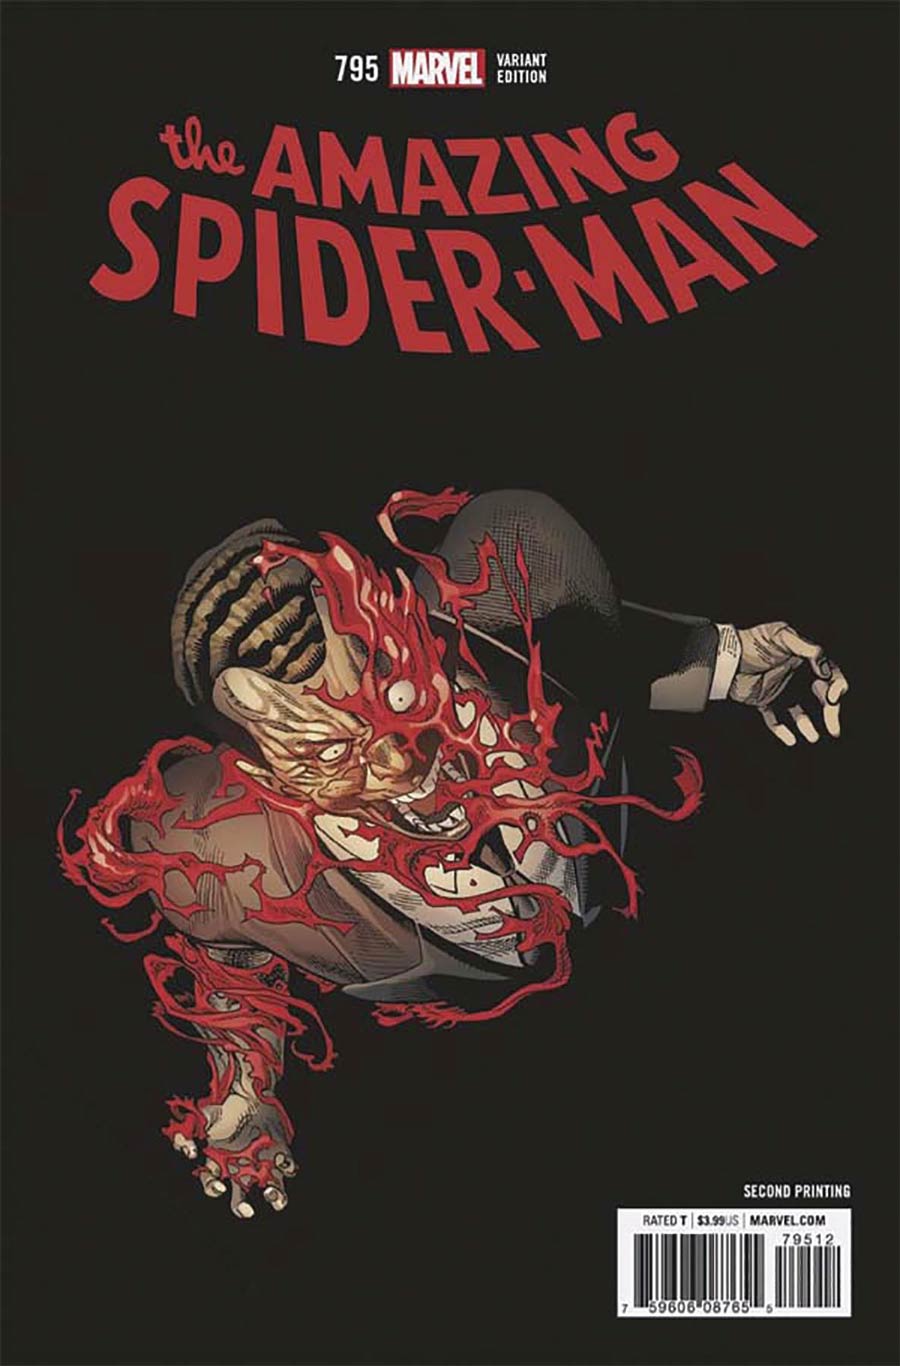 Amazing Spider-Man Vol 4 #795 Cover E DF Ultra-Limited Symbiote Silver Signature Series Encore Edition Signed By John Romita Sr